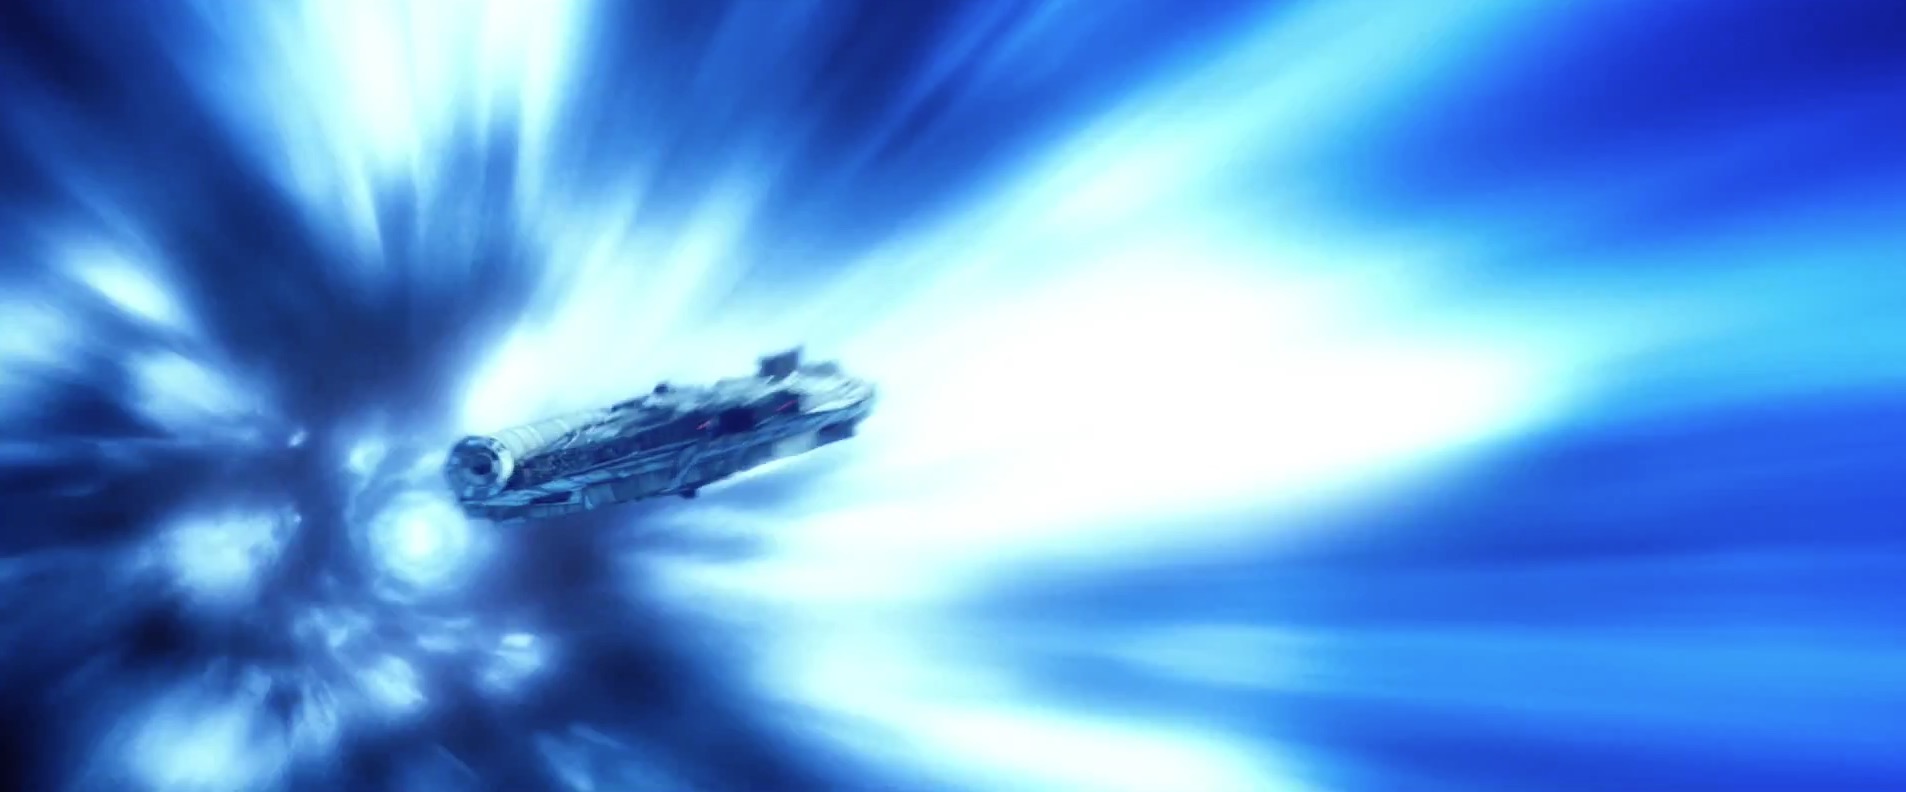 The Millennium Falcon flies through hyperspace